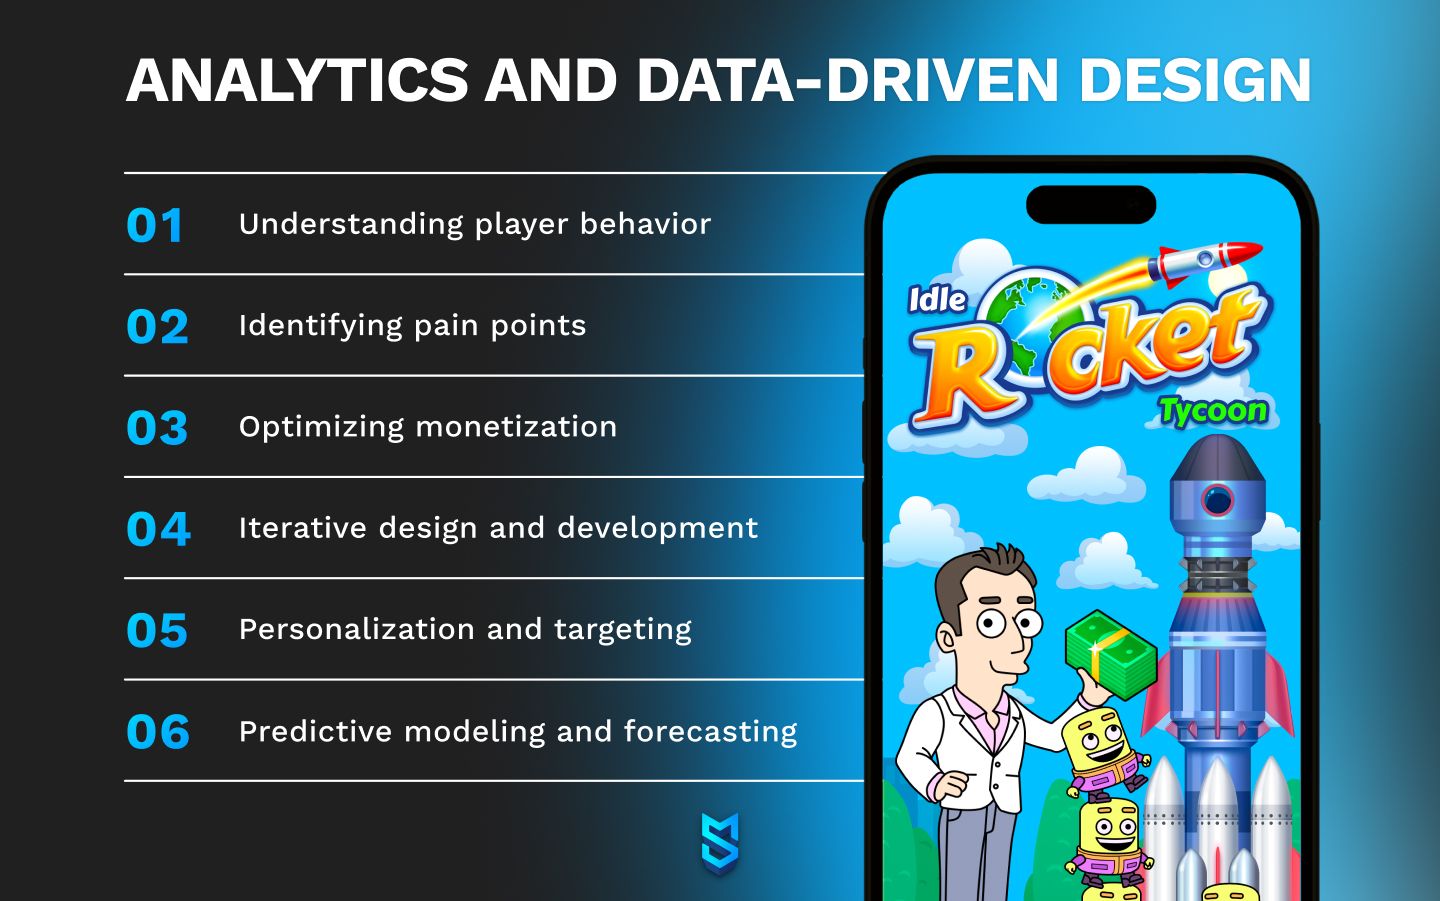 Analytics and data-driven design